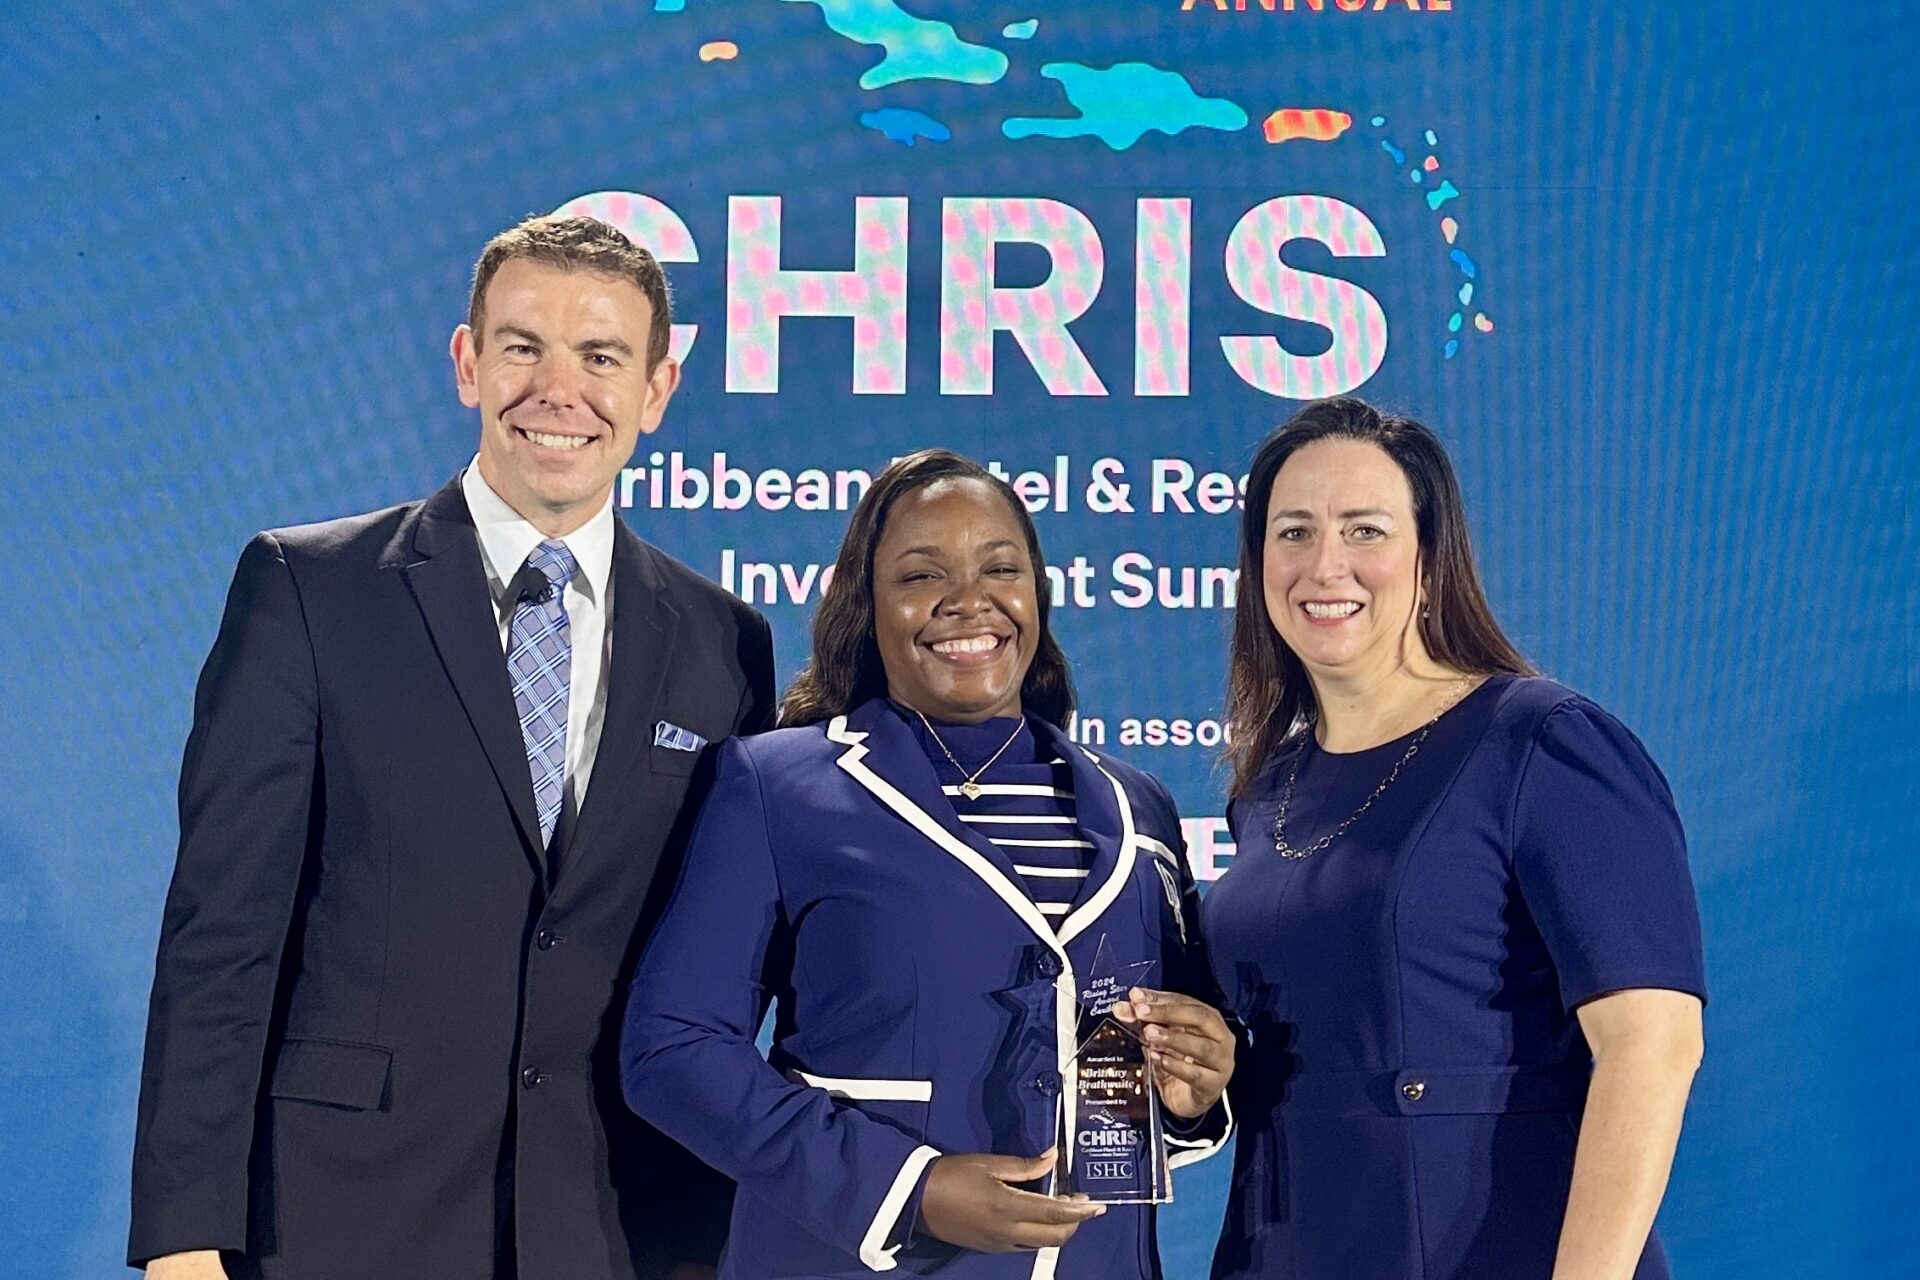 Rising Star Award Caribbean presented to Brittany Brathwaite at CHRIS